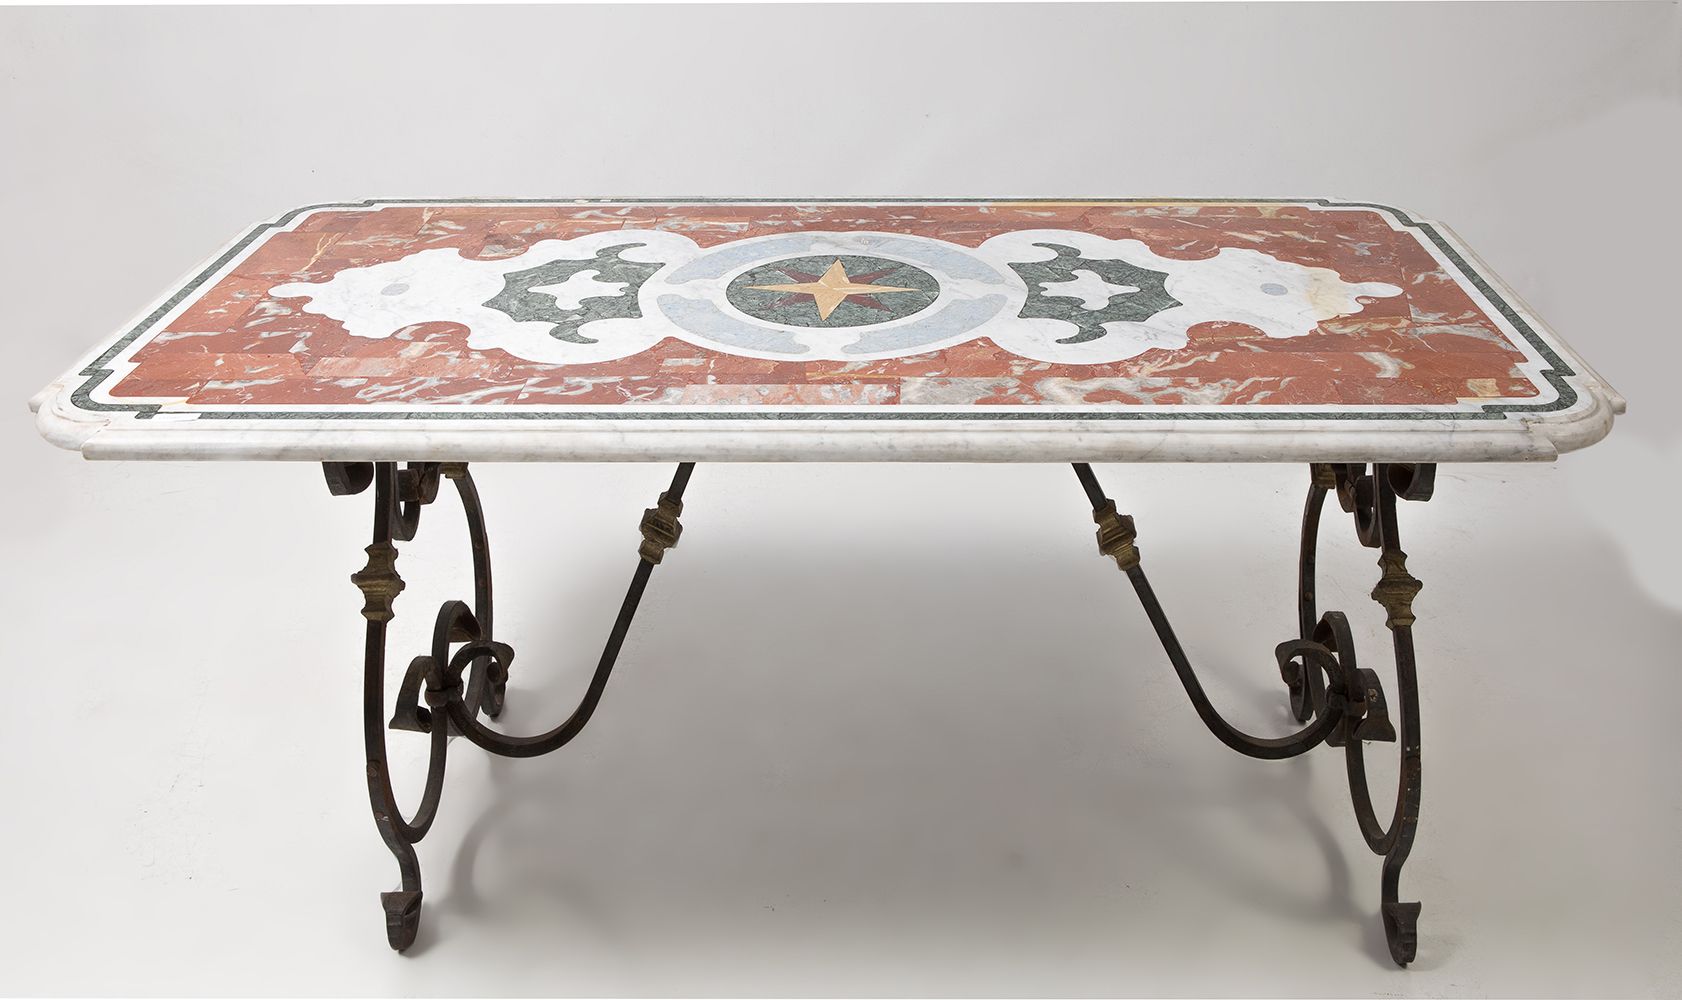 Marble table with iron base 桌子，遵循意大利模式，铁制底座和大理石桌面，20世纪中期。 尺寸：76 x 180 x 90厘米。